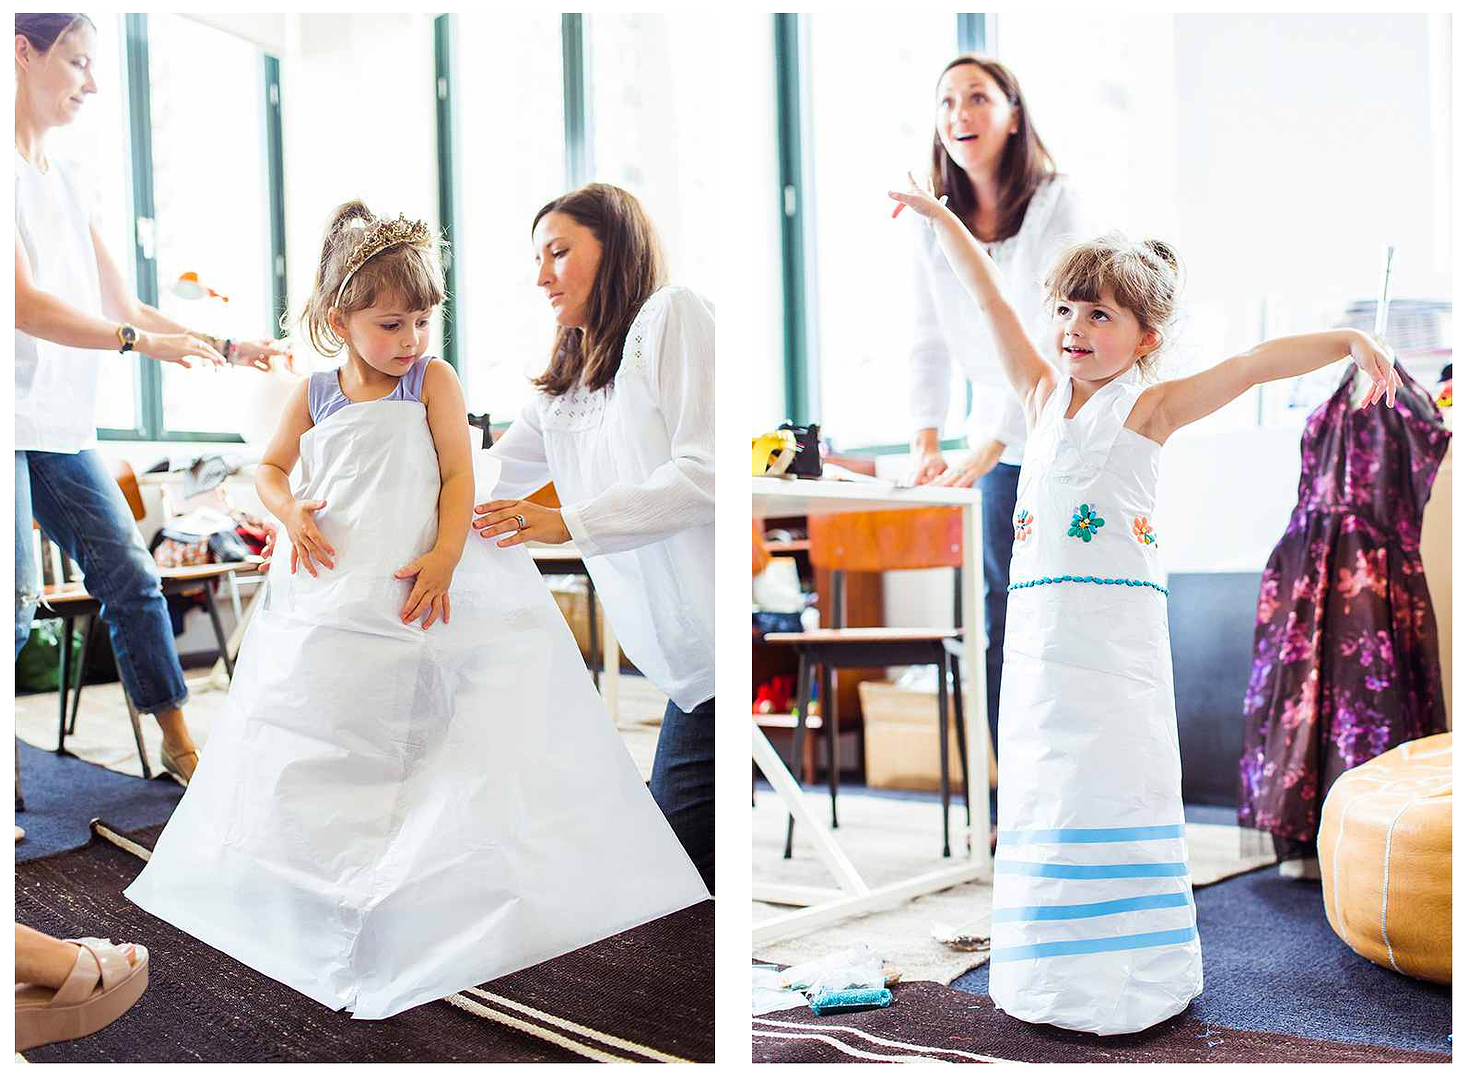 Little Mayhem for J Crew: The tiny fashion designer gets her own kid's line!